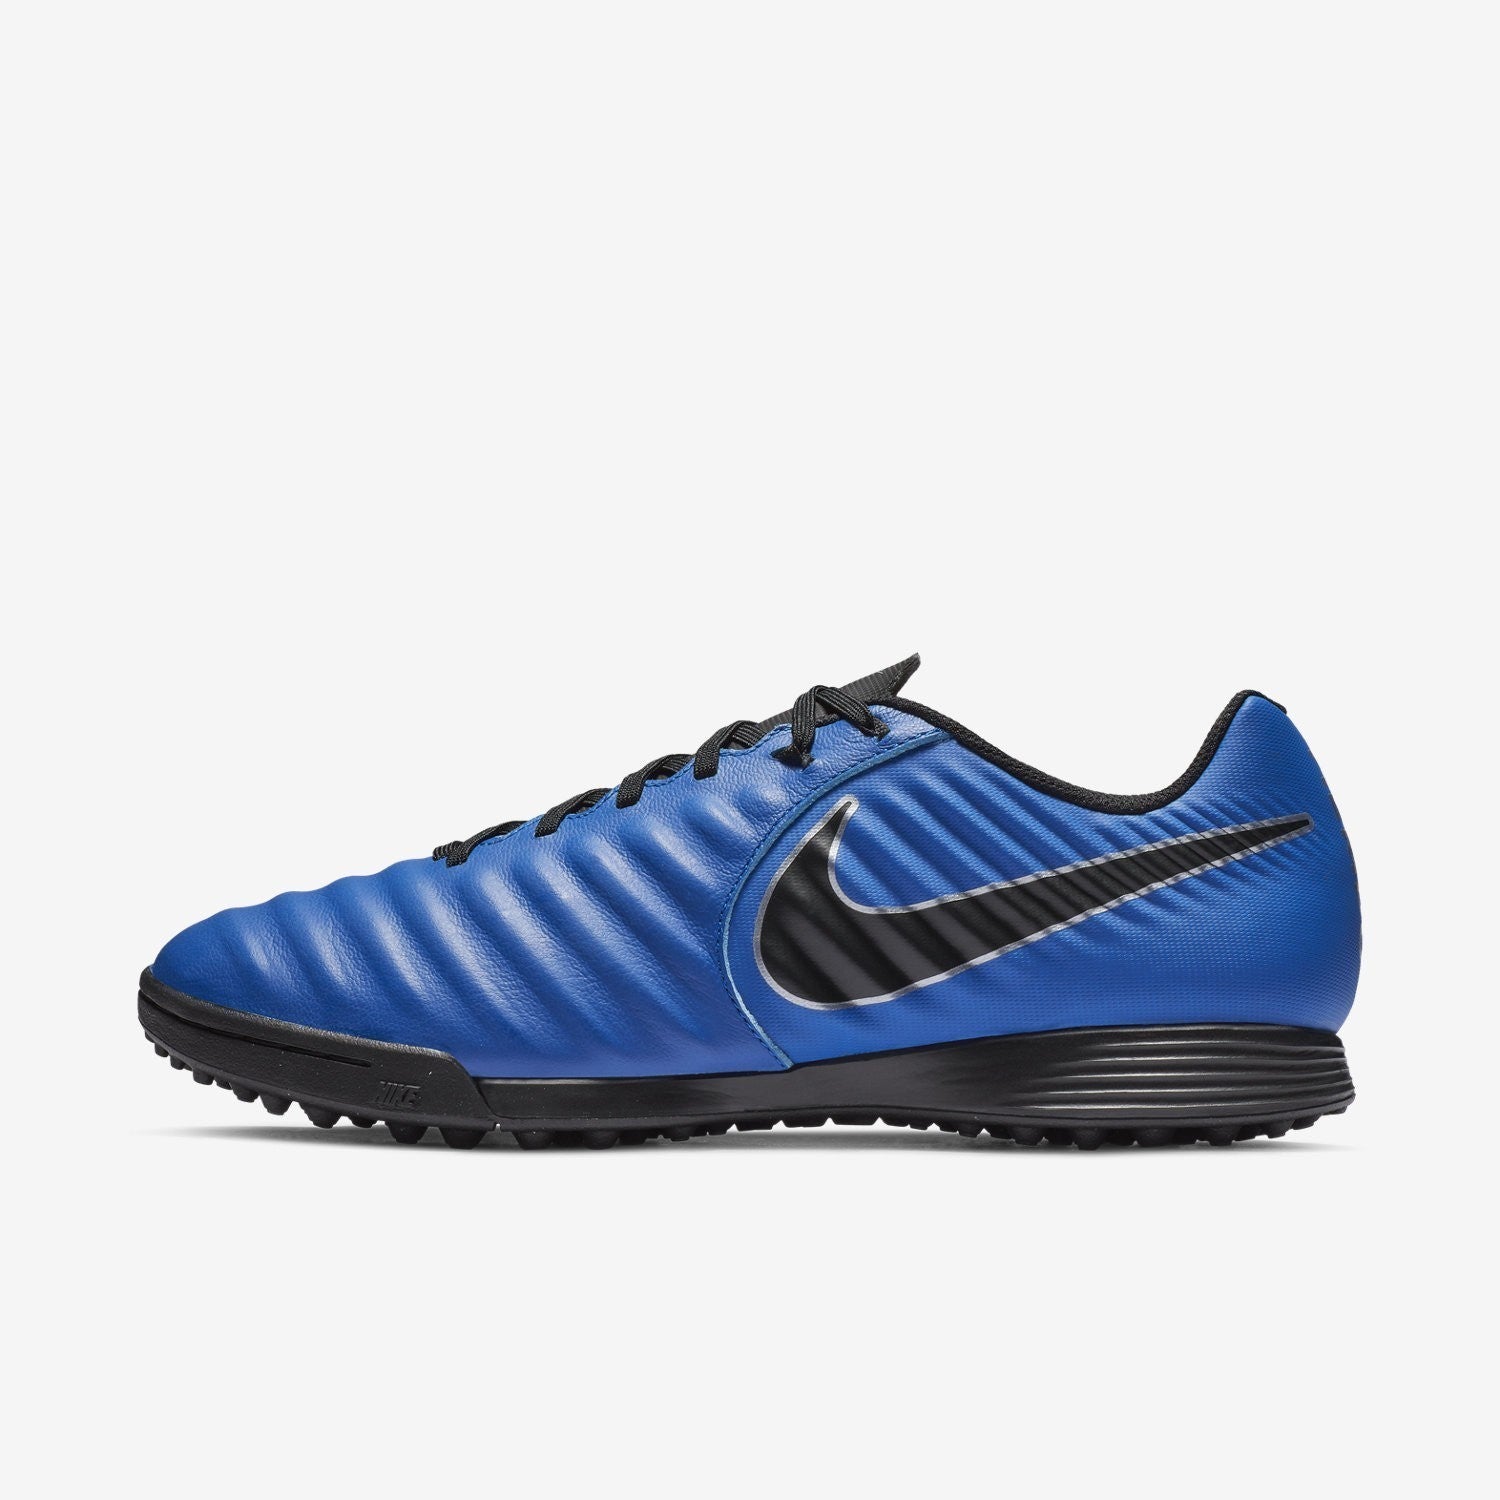 Dubbelzinnig diagonaal Mompelen Tiempo Legend VII Academy Turf Soccer Shoes - Racer Blue